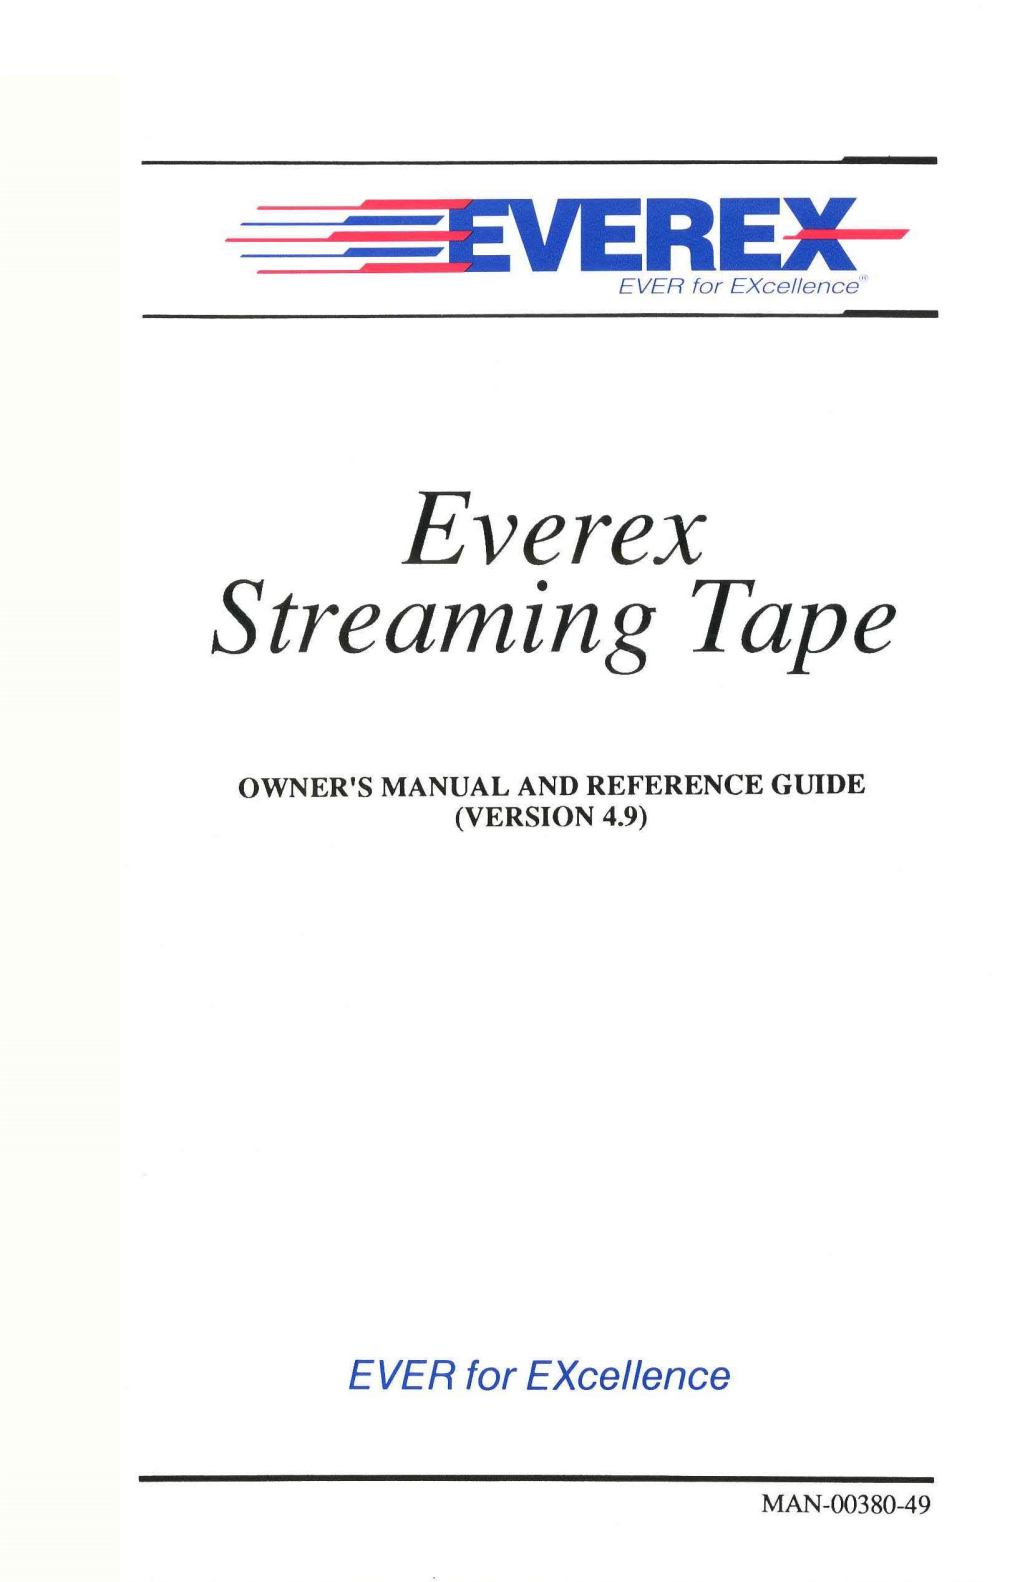 Everex Streaming Tape